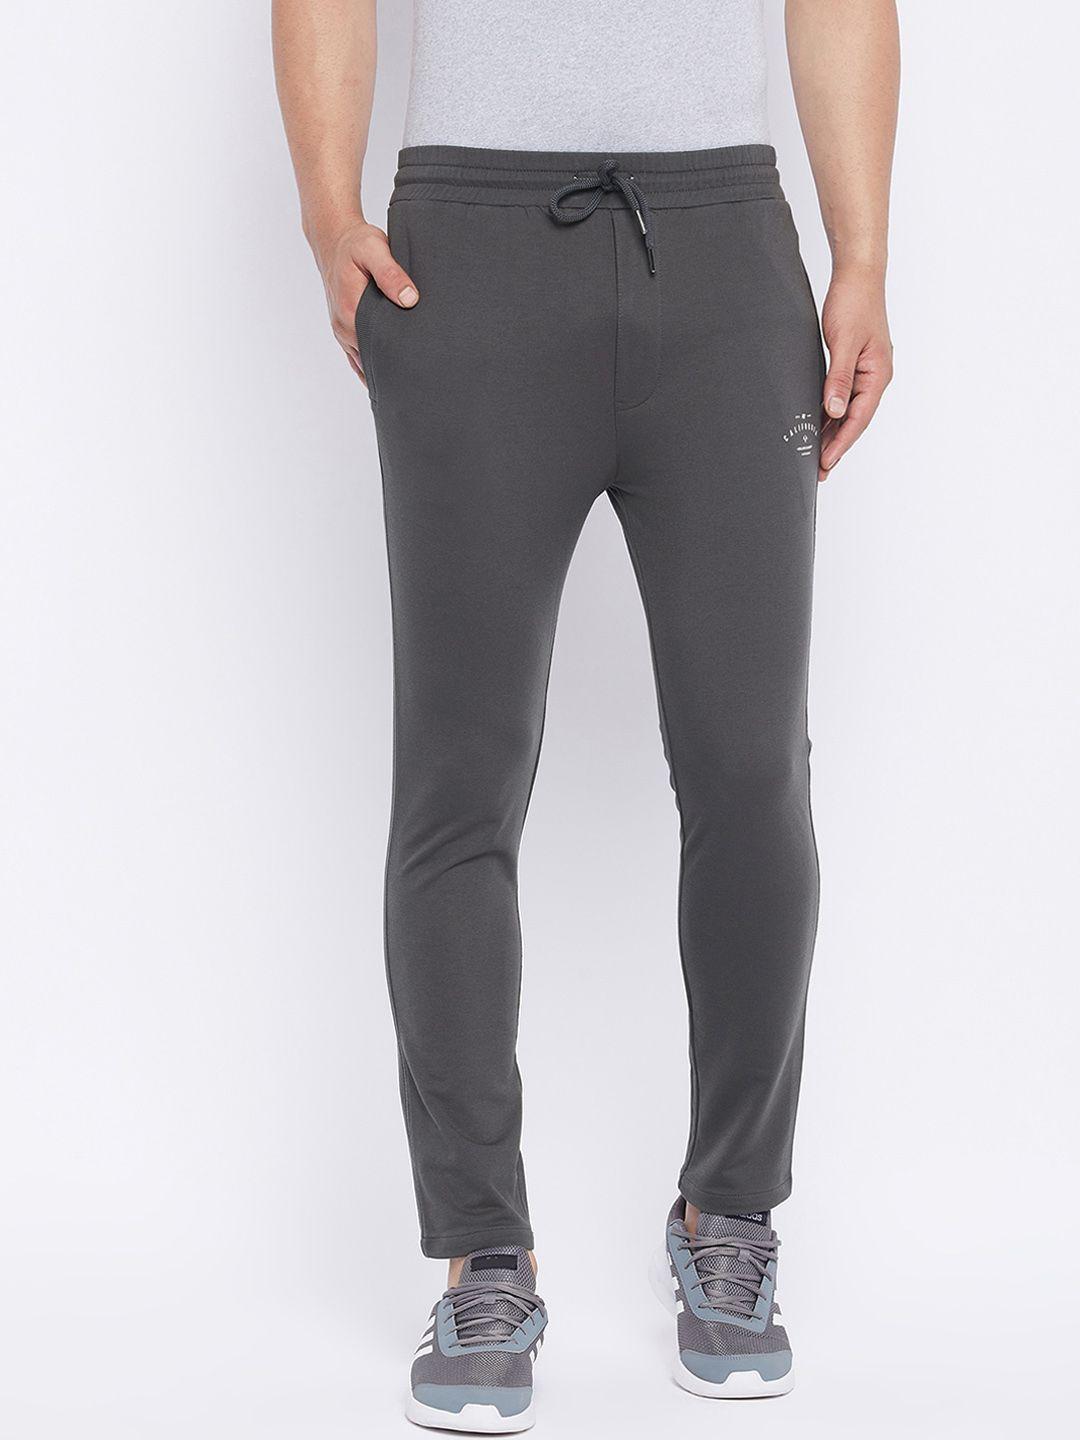 qubic men charcoal grey solid slim fit track pants